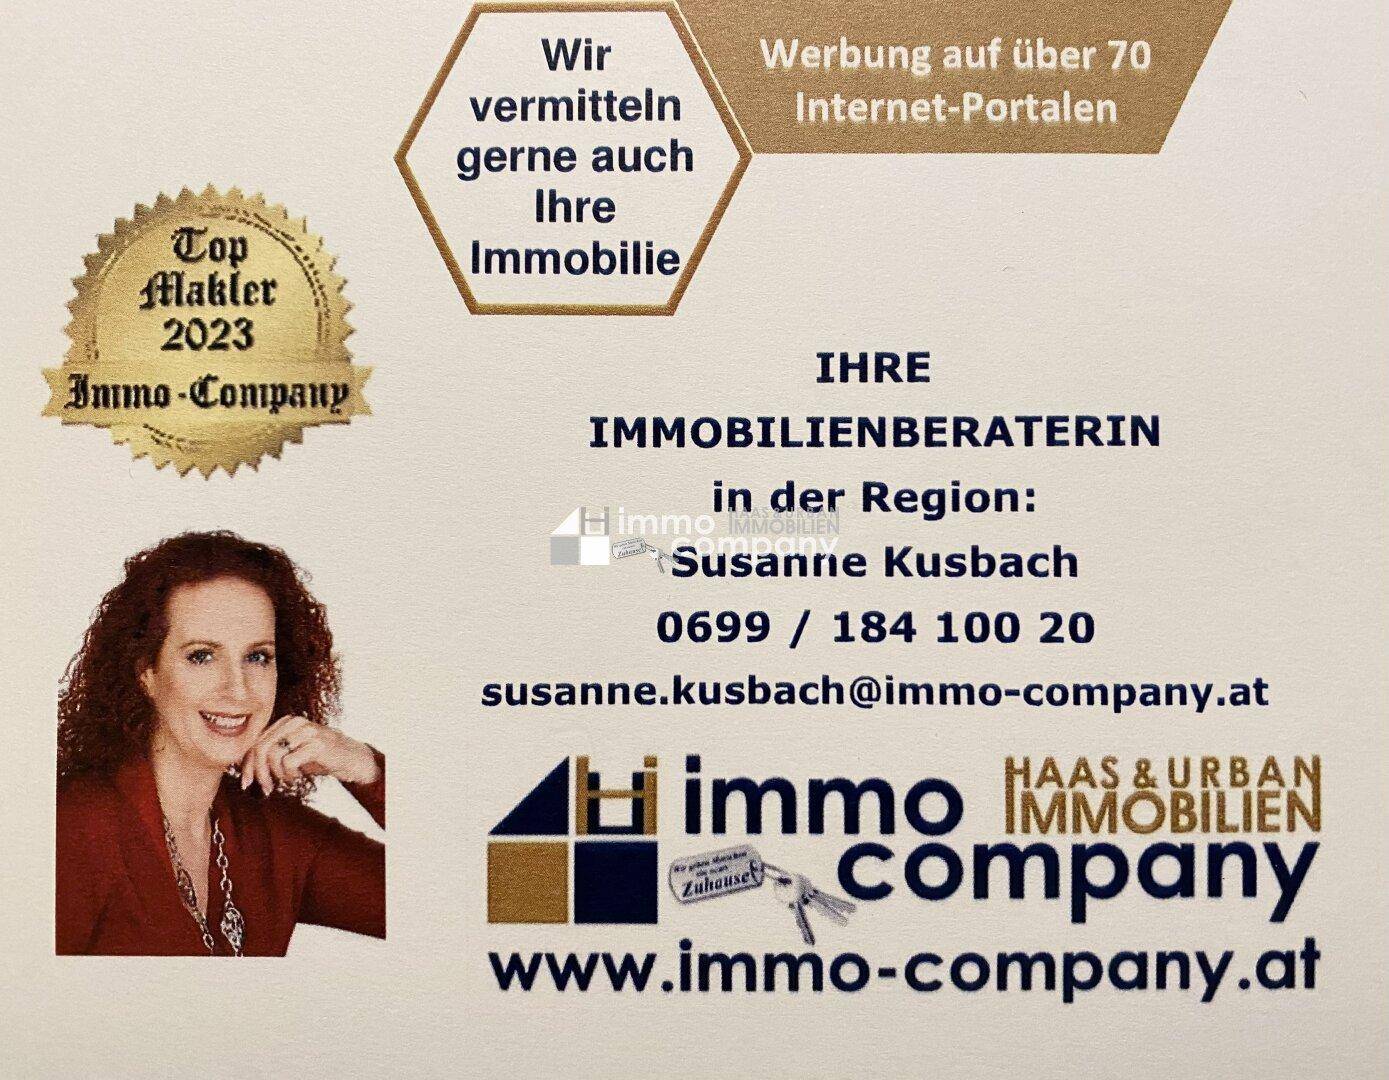 Immo-Company